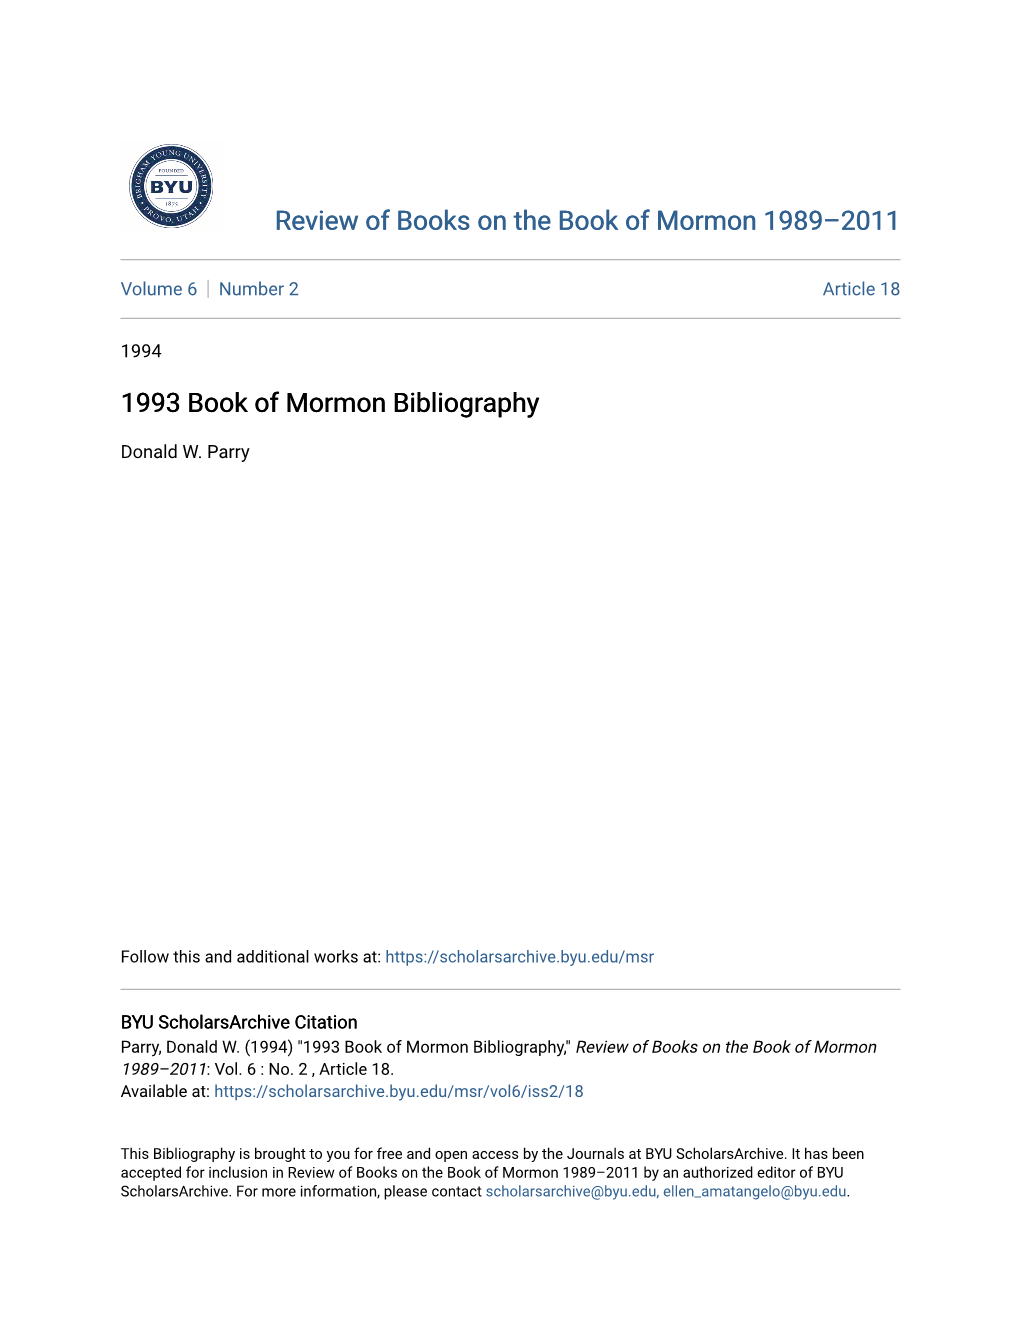 1993 Book of Mormon Bibliography